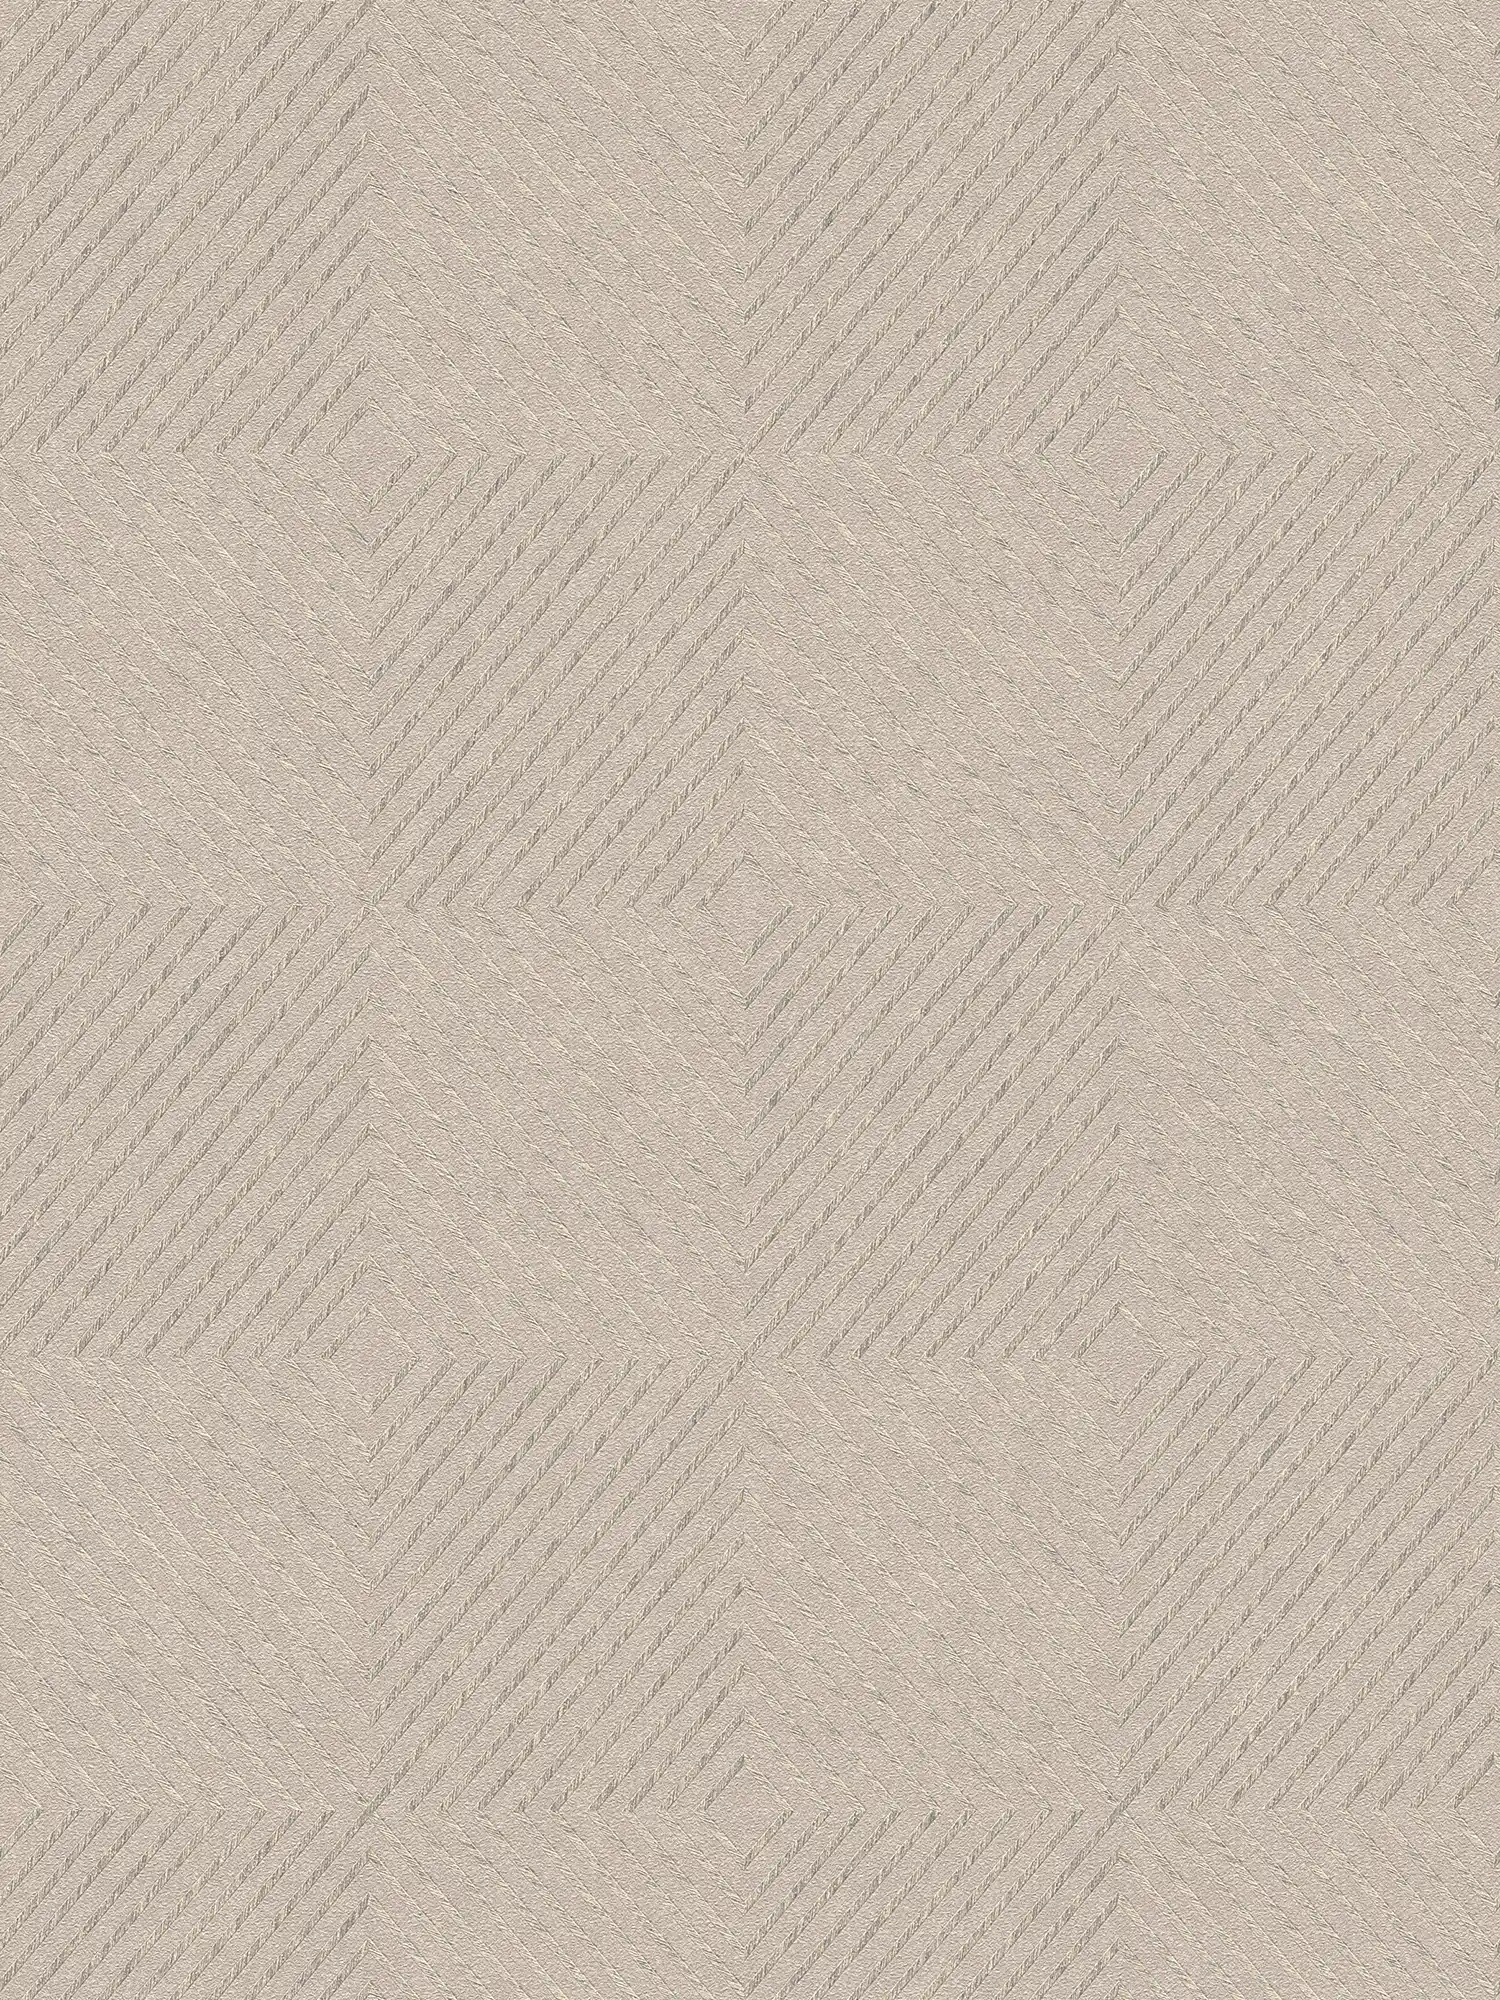 carta da parati design grafico, stile scandinavo - beige, argento
